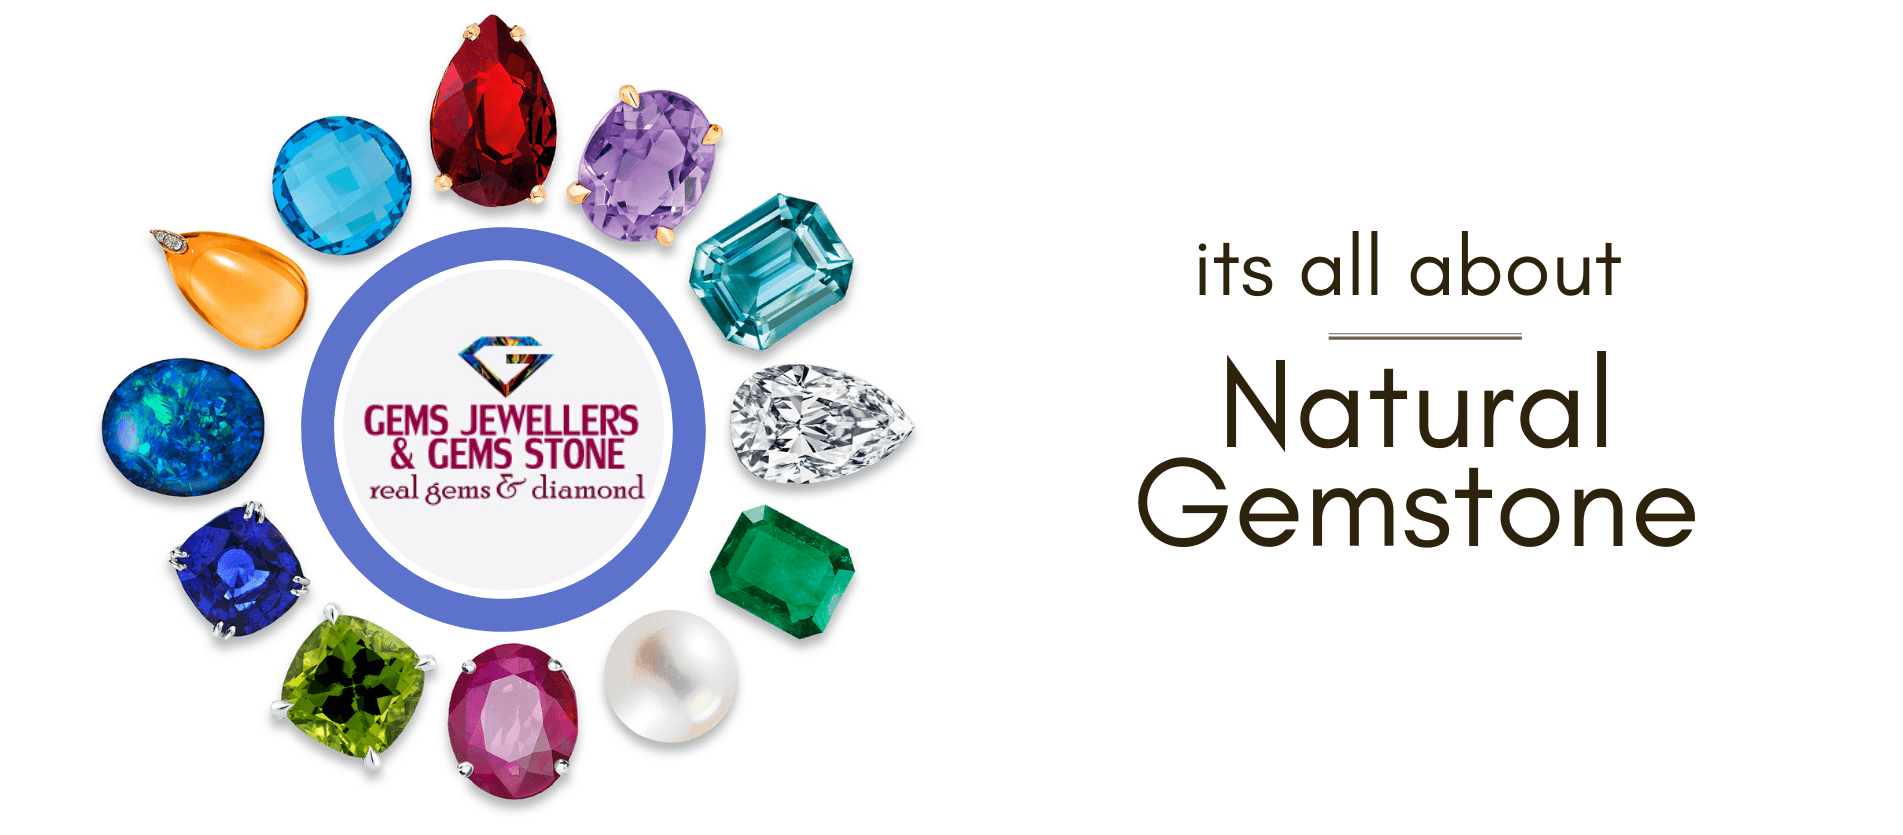 Natural Gemstone - রত্নপাথর - Gems Jewellers Gems Stone